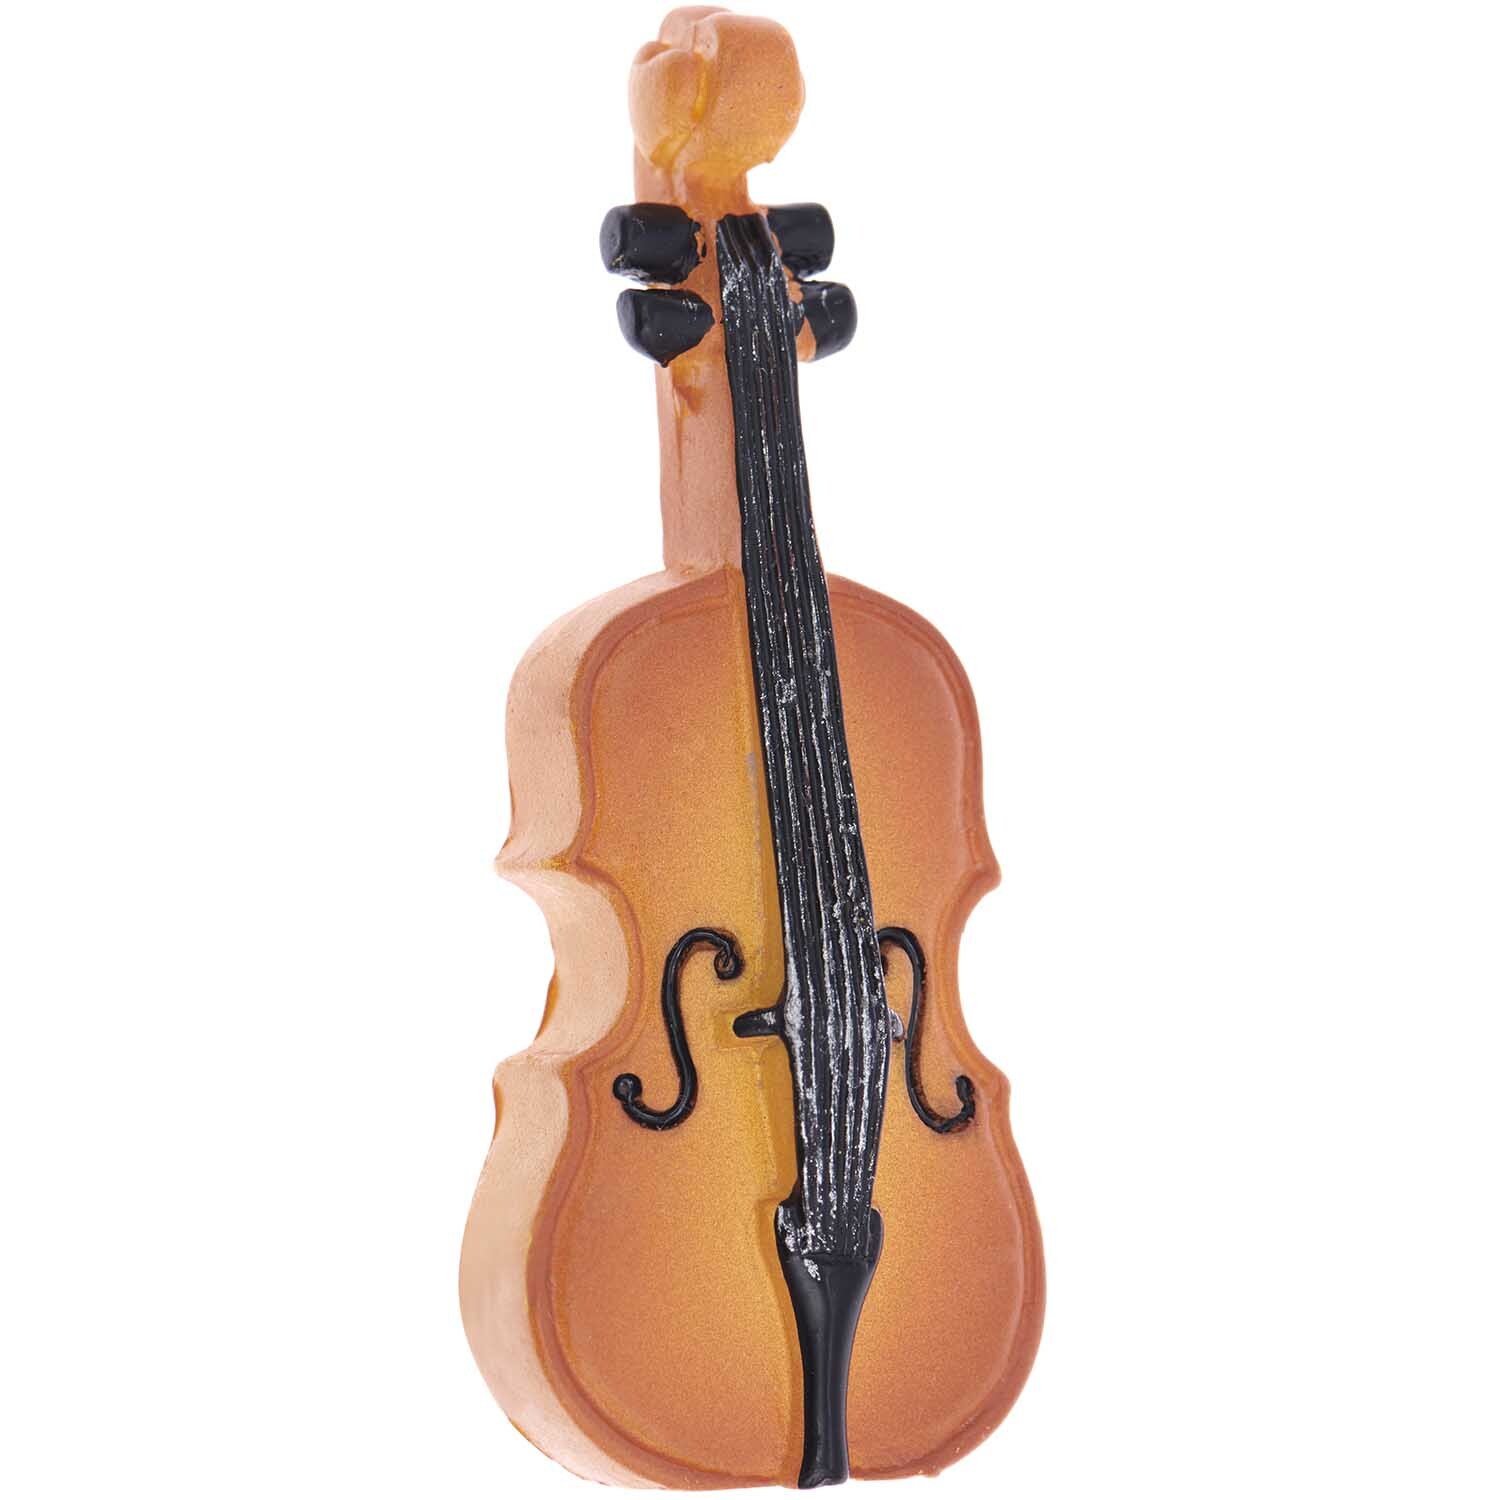 Miniatur Geige 2,5x6,5x1cm